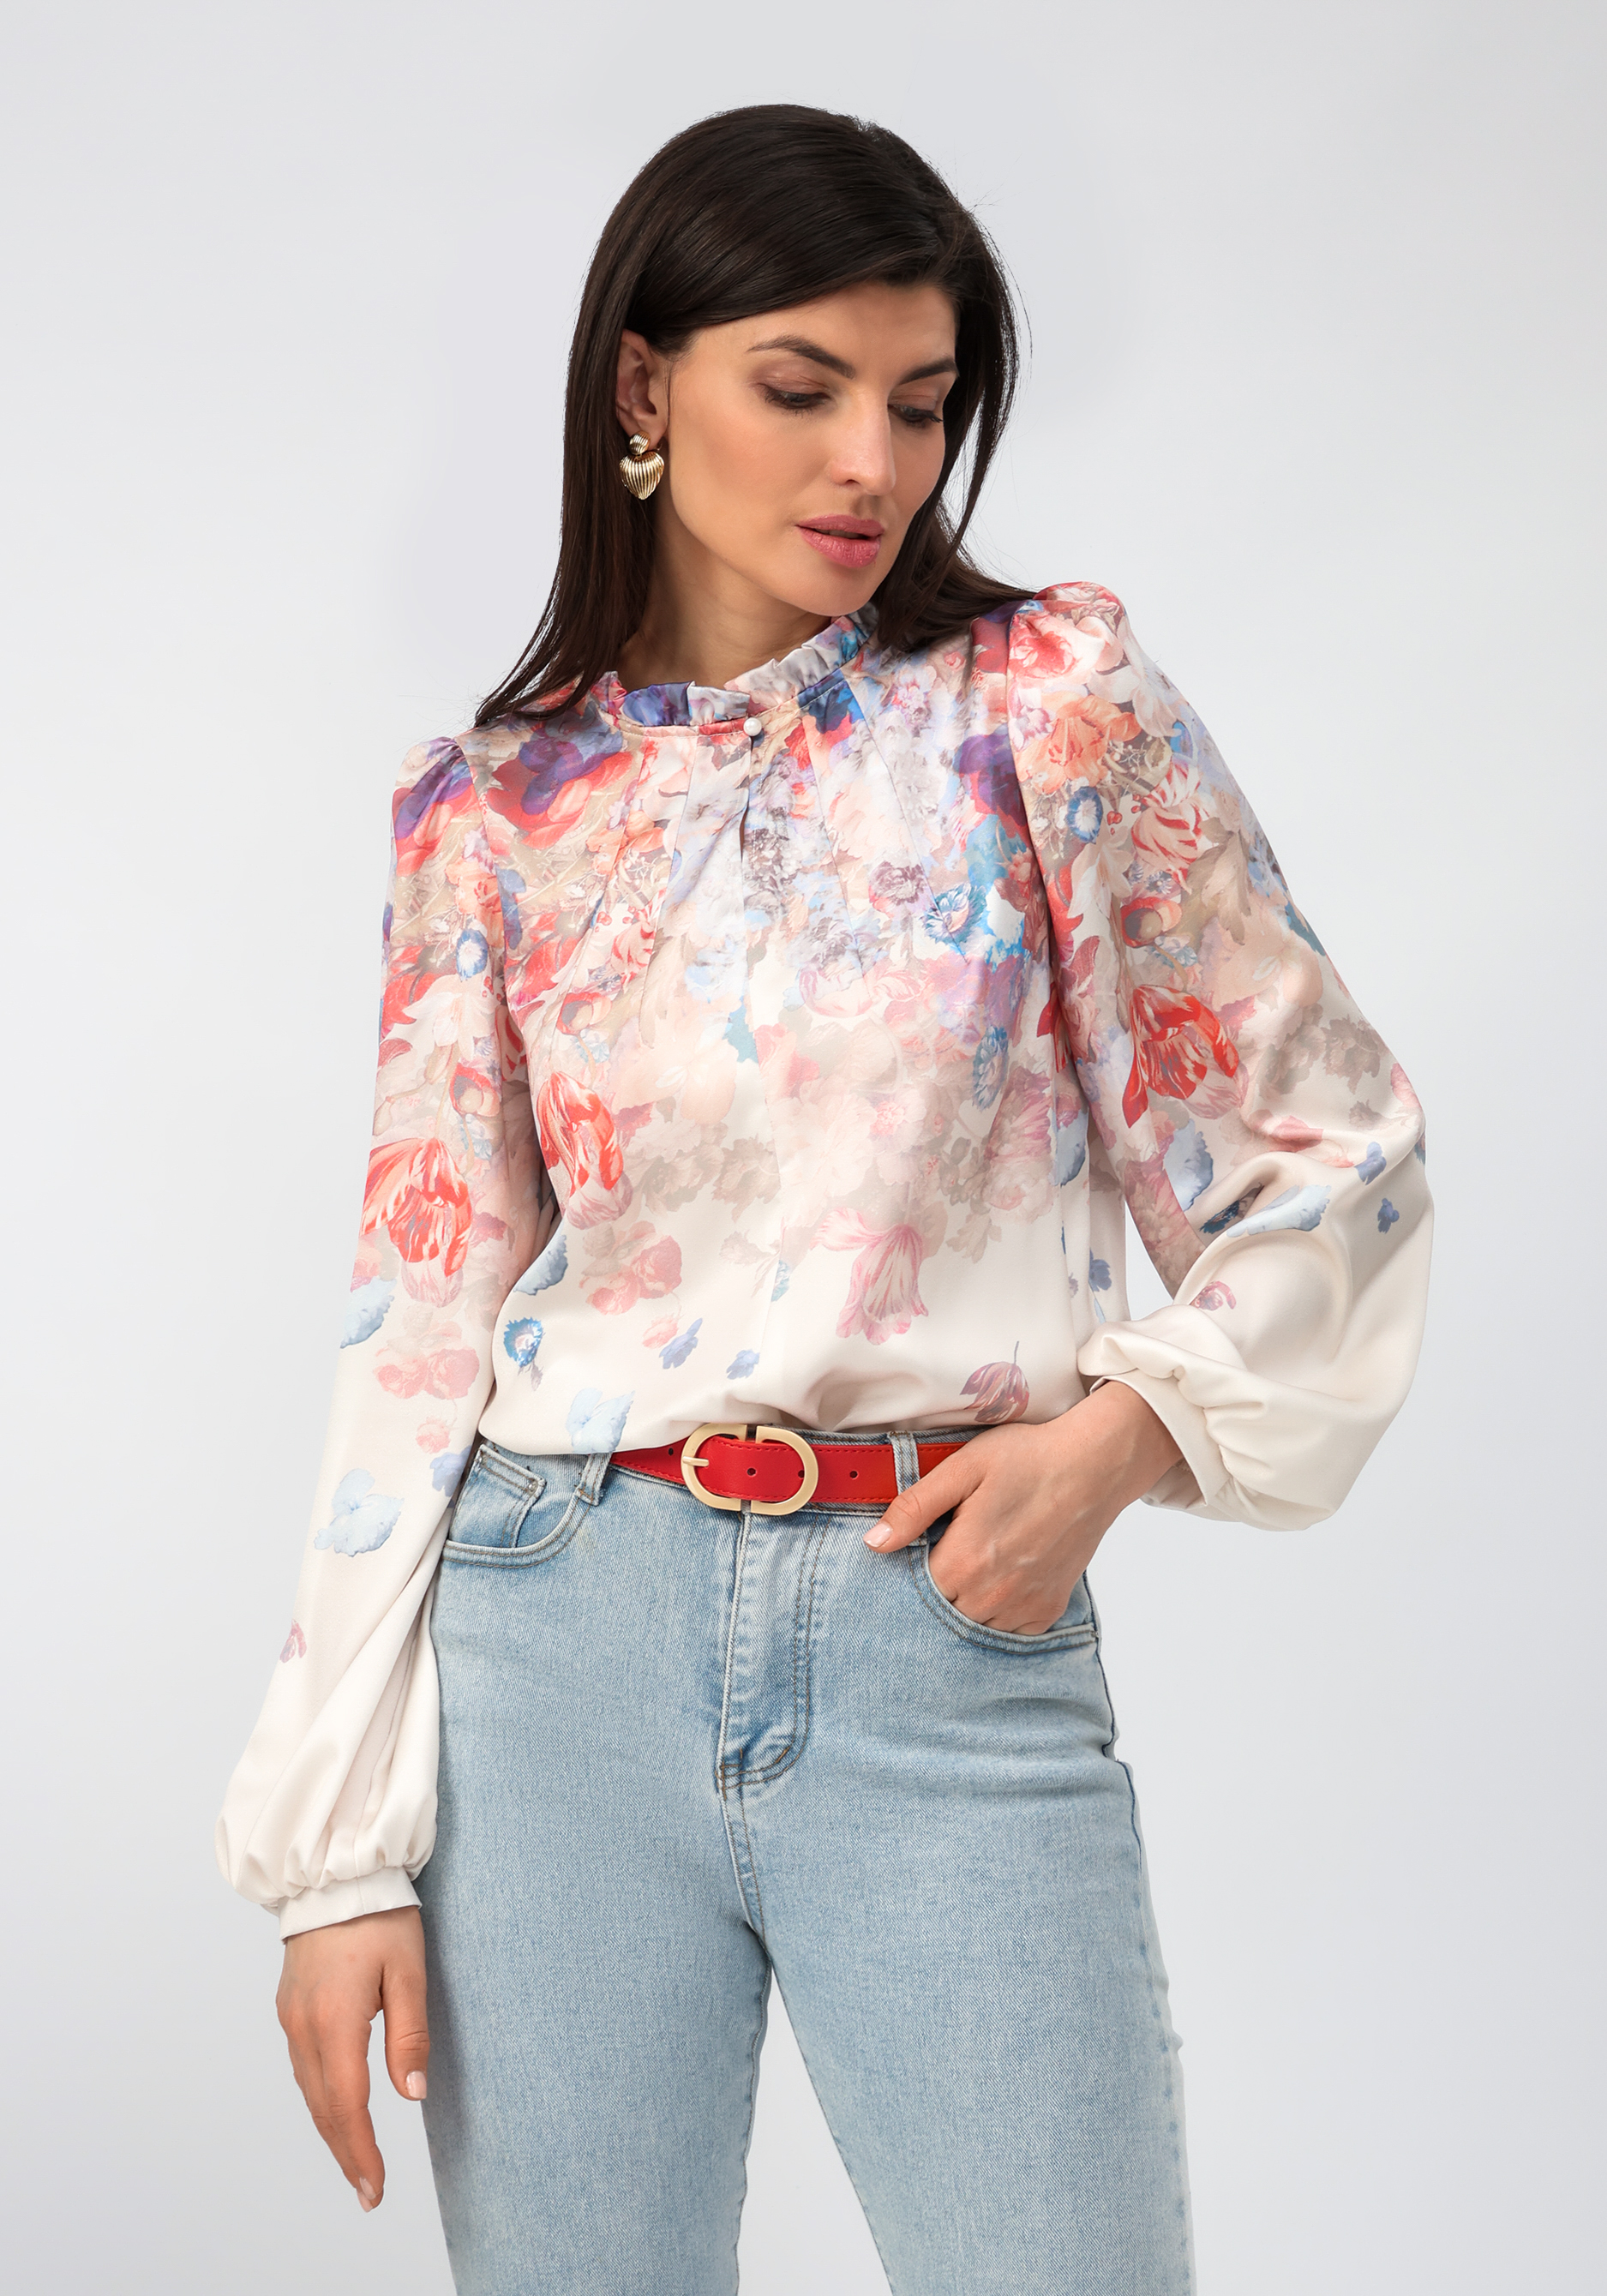 Блуза нарядная с градиентным цветным рисунком кпб зима лето луара белый р 1 5 сп